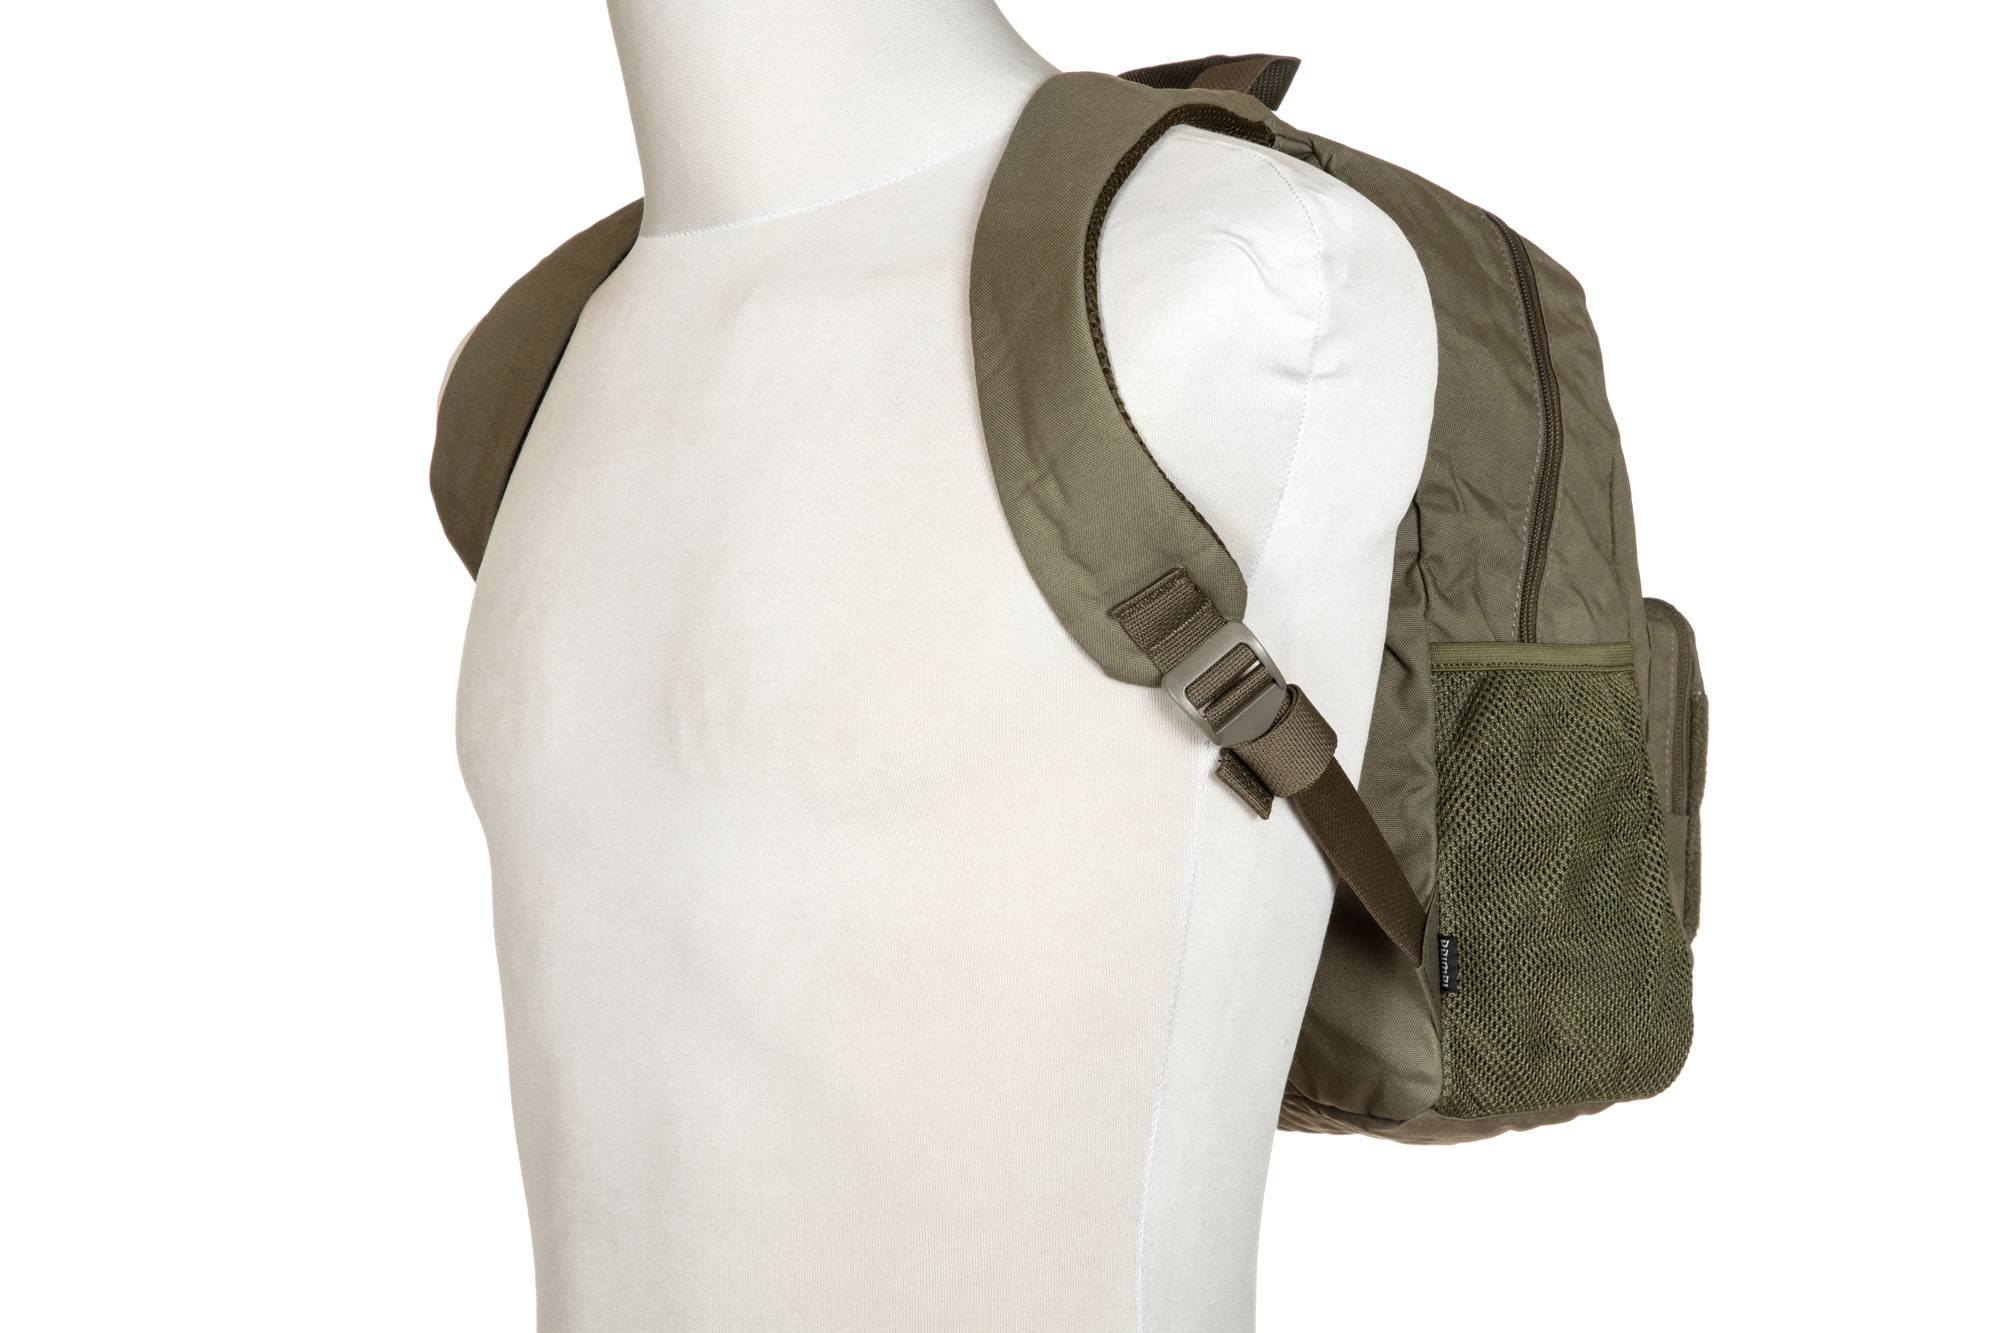 Foldable Backpack Dioc  - Olive